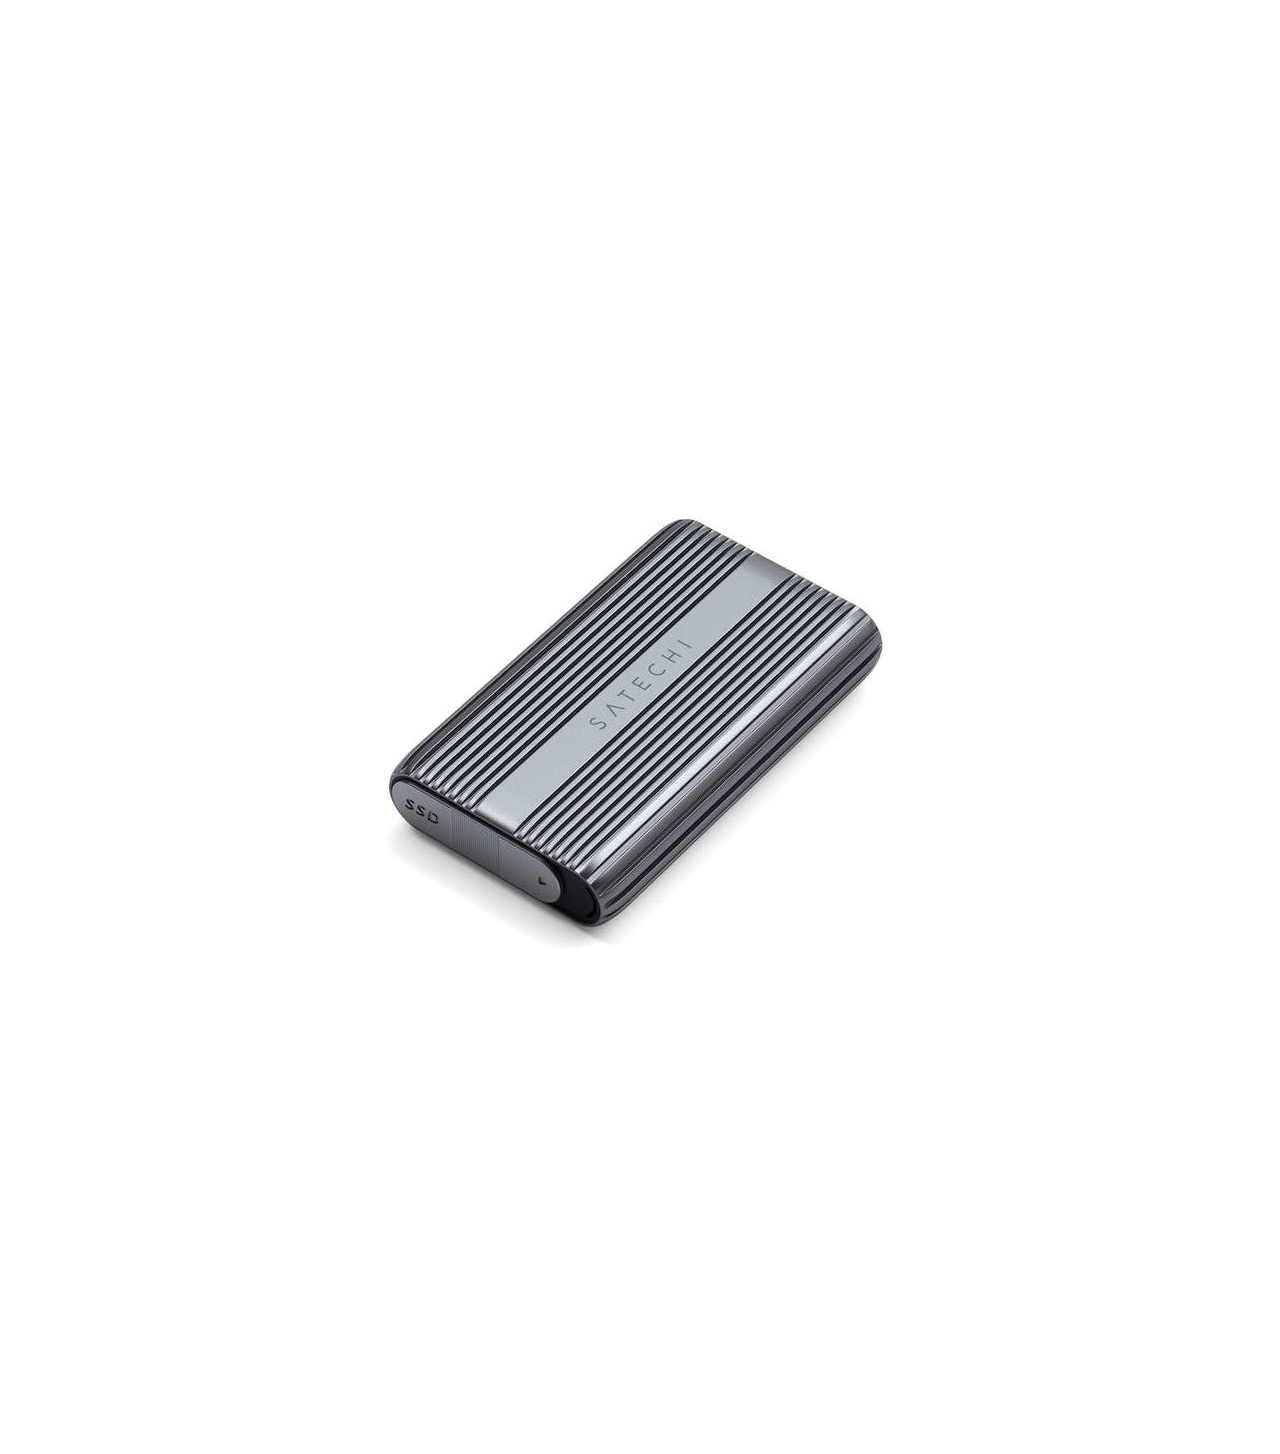 USB4 NVME SSD PRO ENCLOSURE - SPACE GRAY-0